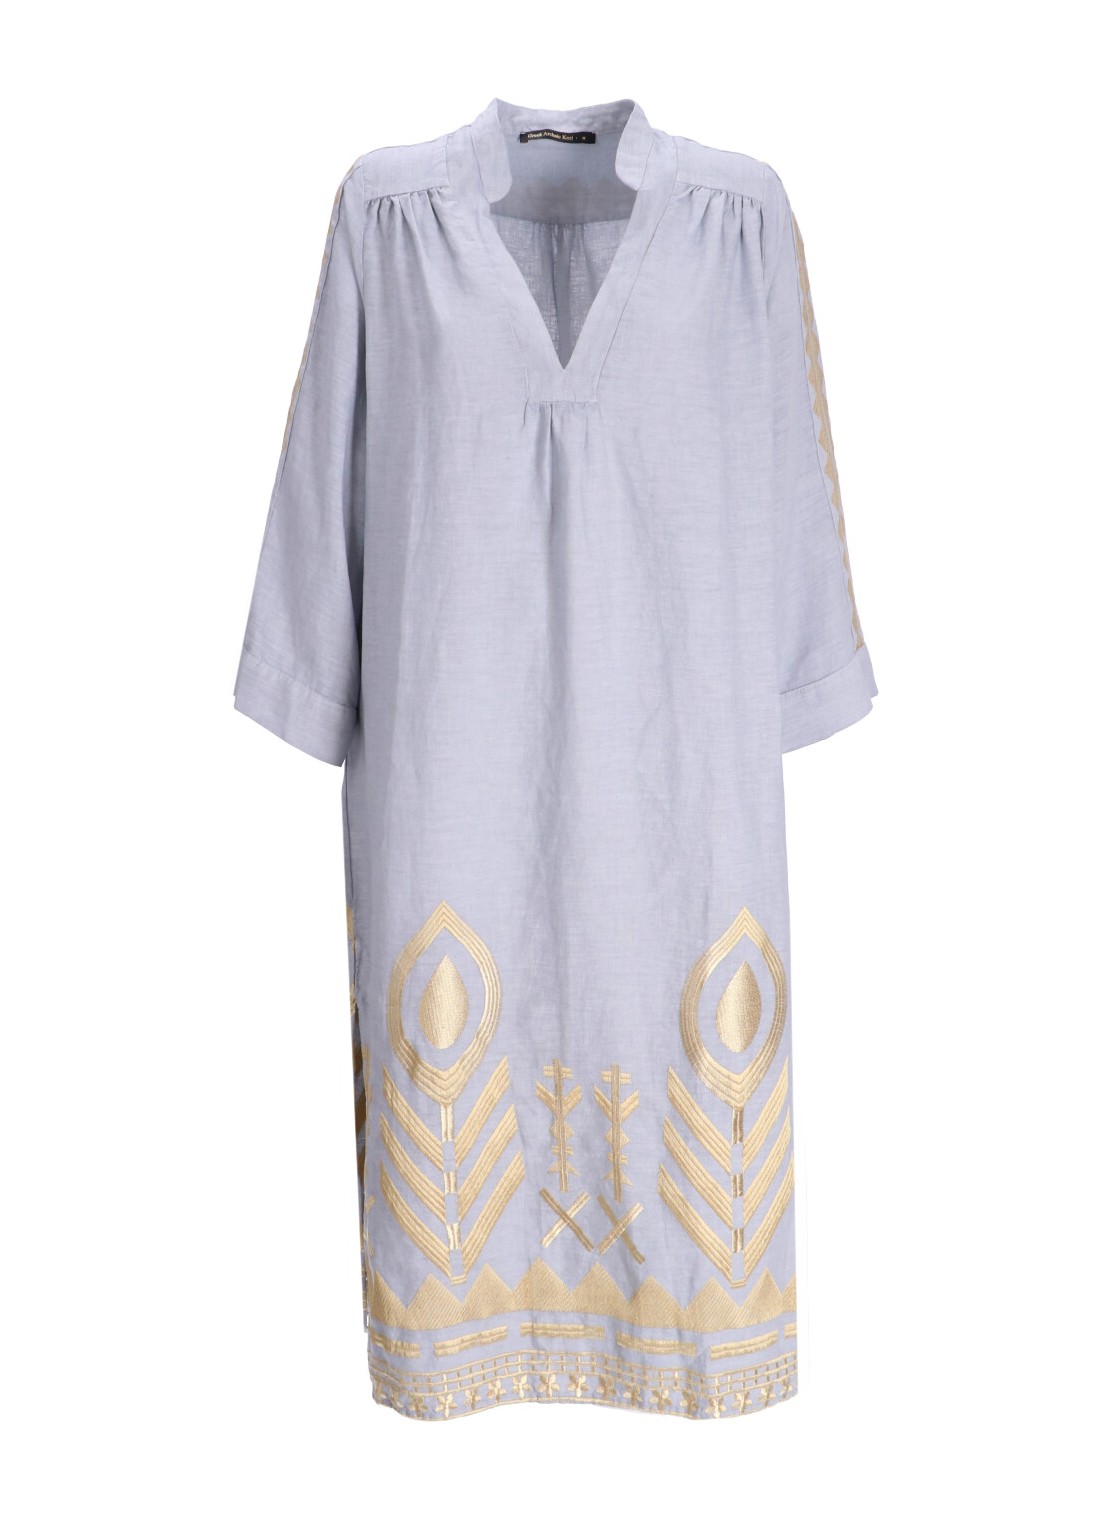 Vestido greek archaic kori dress woman dress long feather chevron l/s s24k230126 148 talla L
 